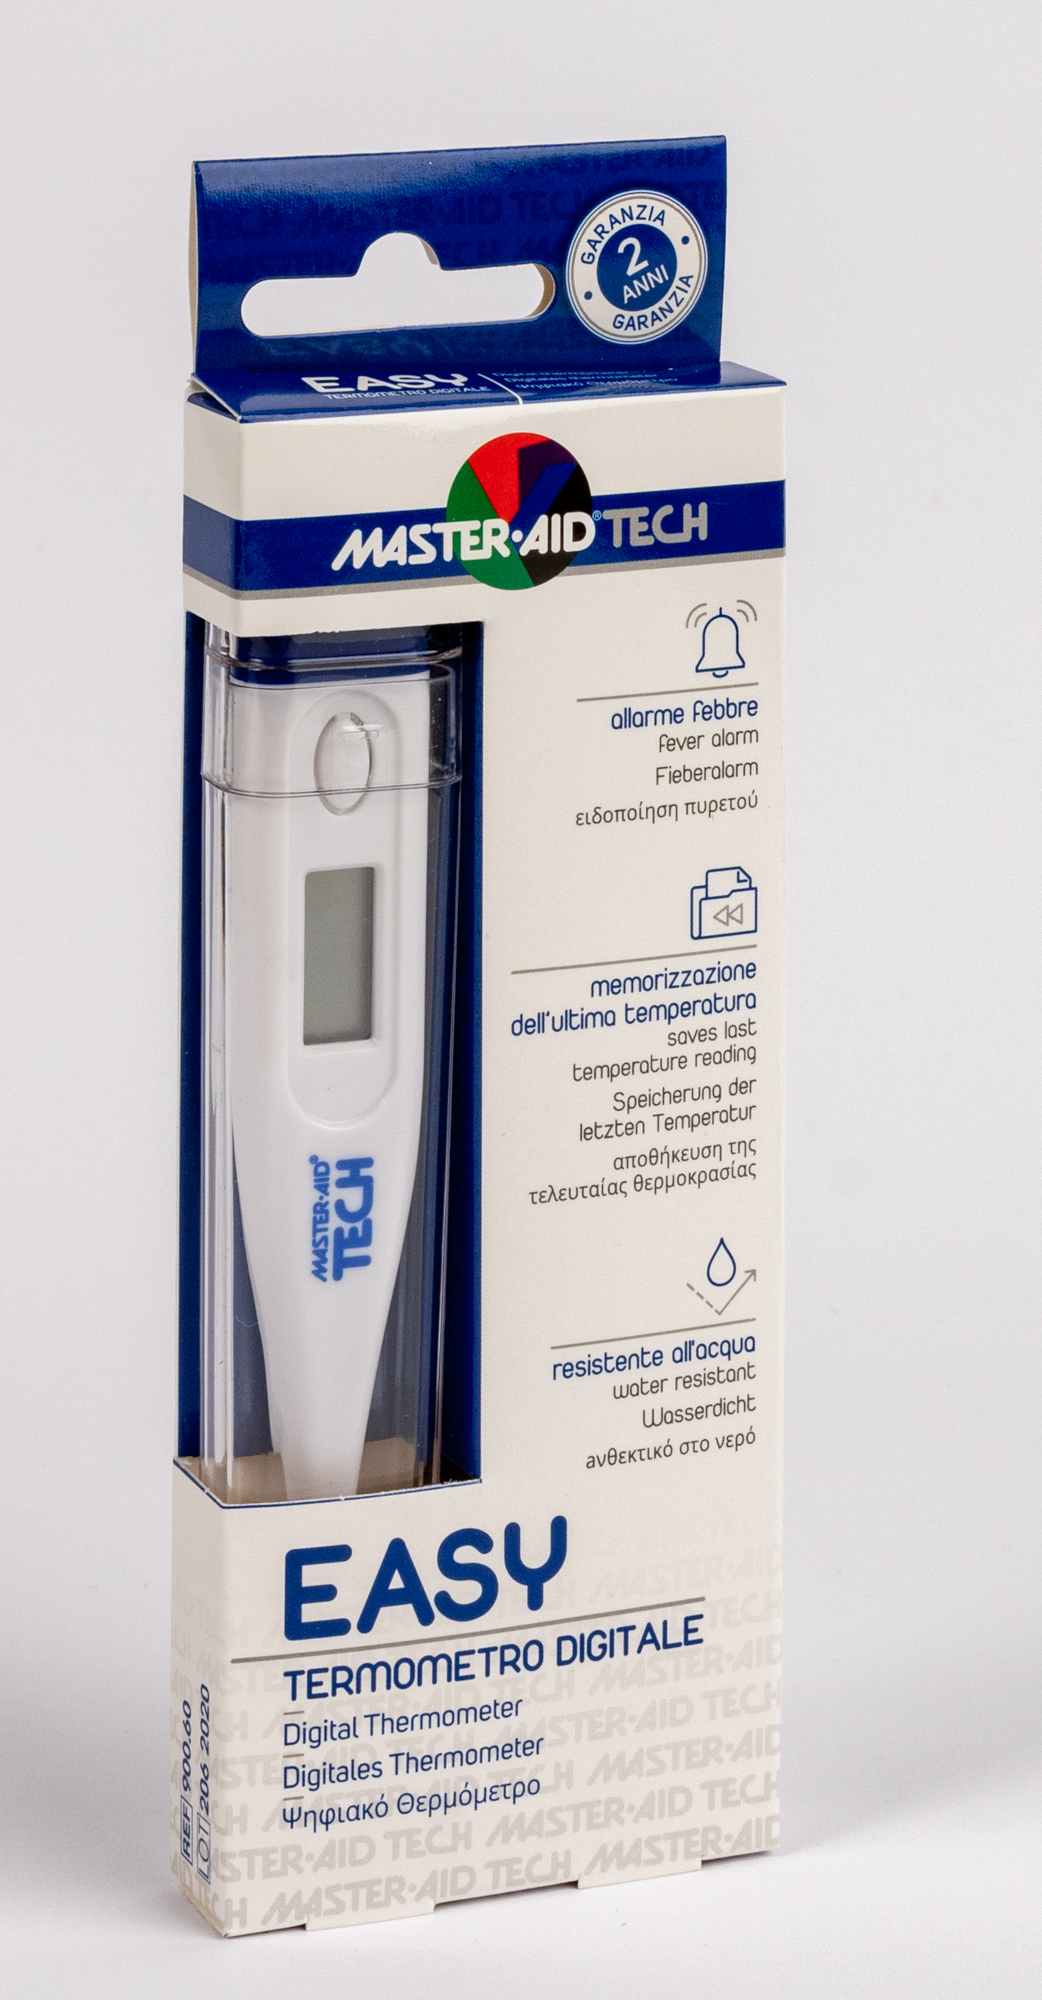 Master-AID Tech Easy Termometro Digitale